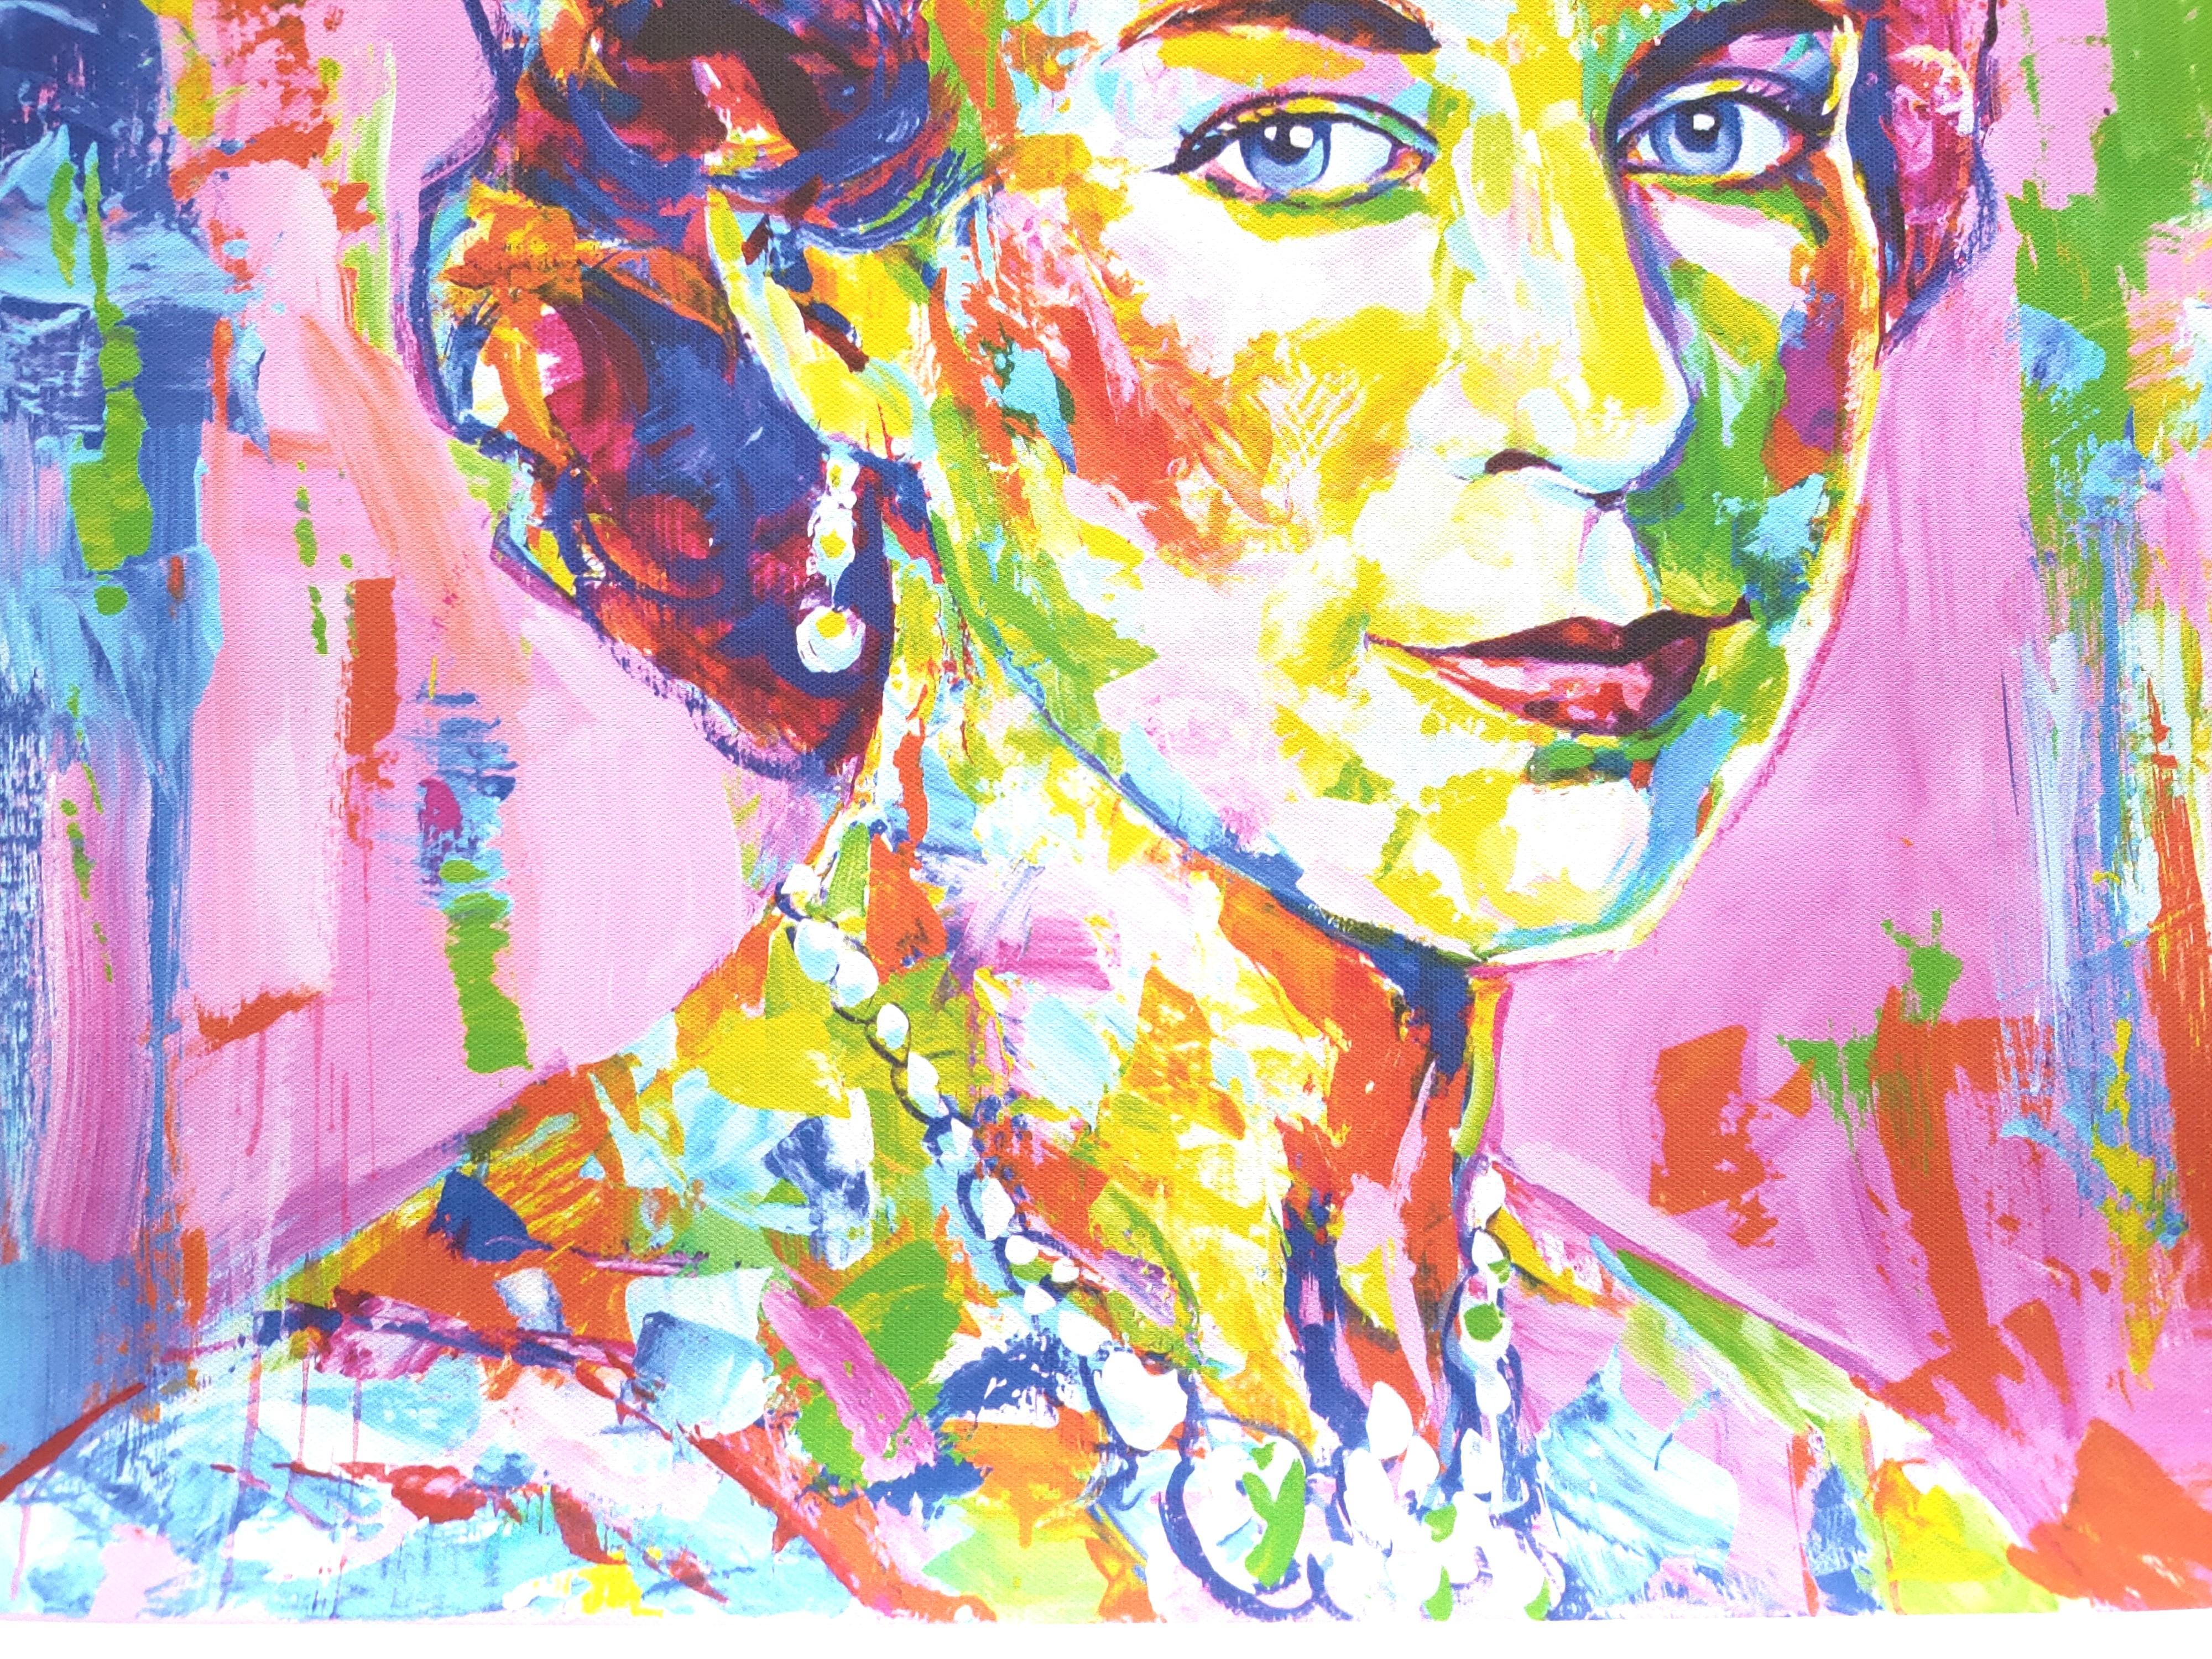 Queen Elizabeth II Pop Art Portrait Print on Canvas 50x50cm by Iryna Kastsova 3